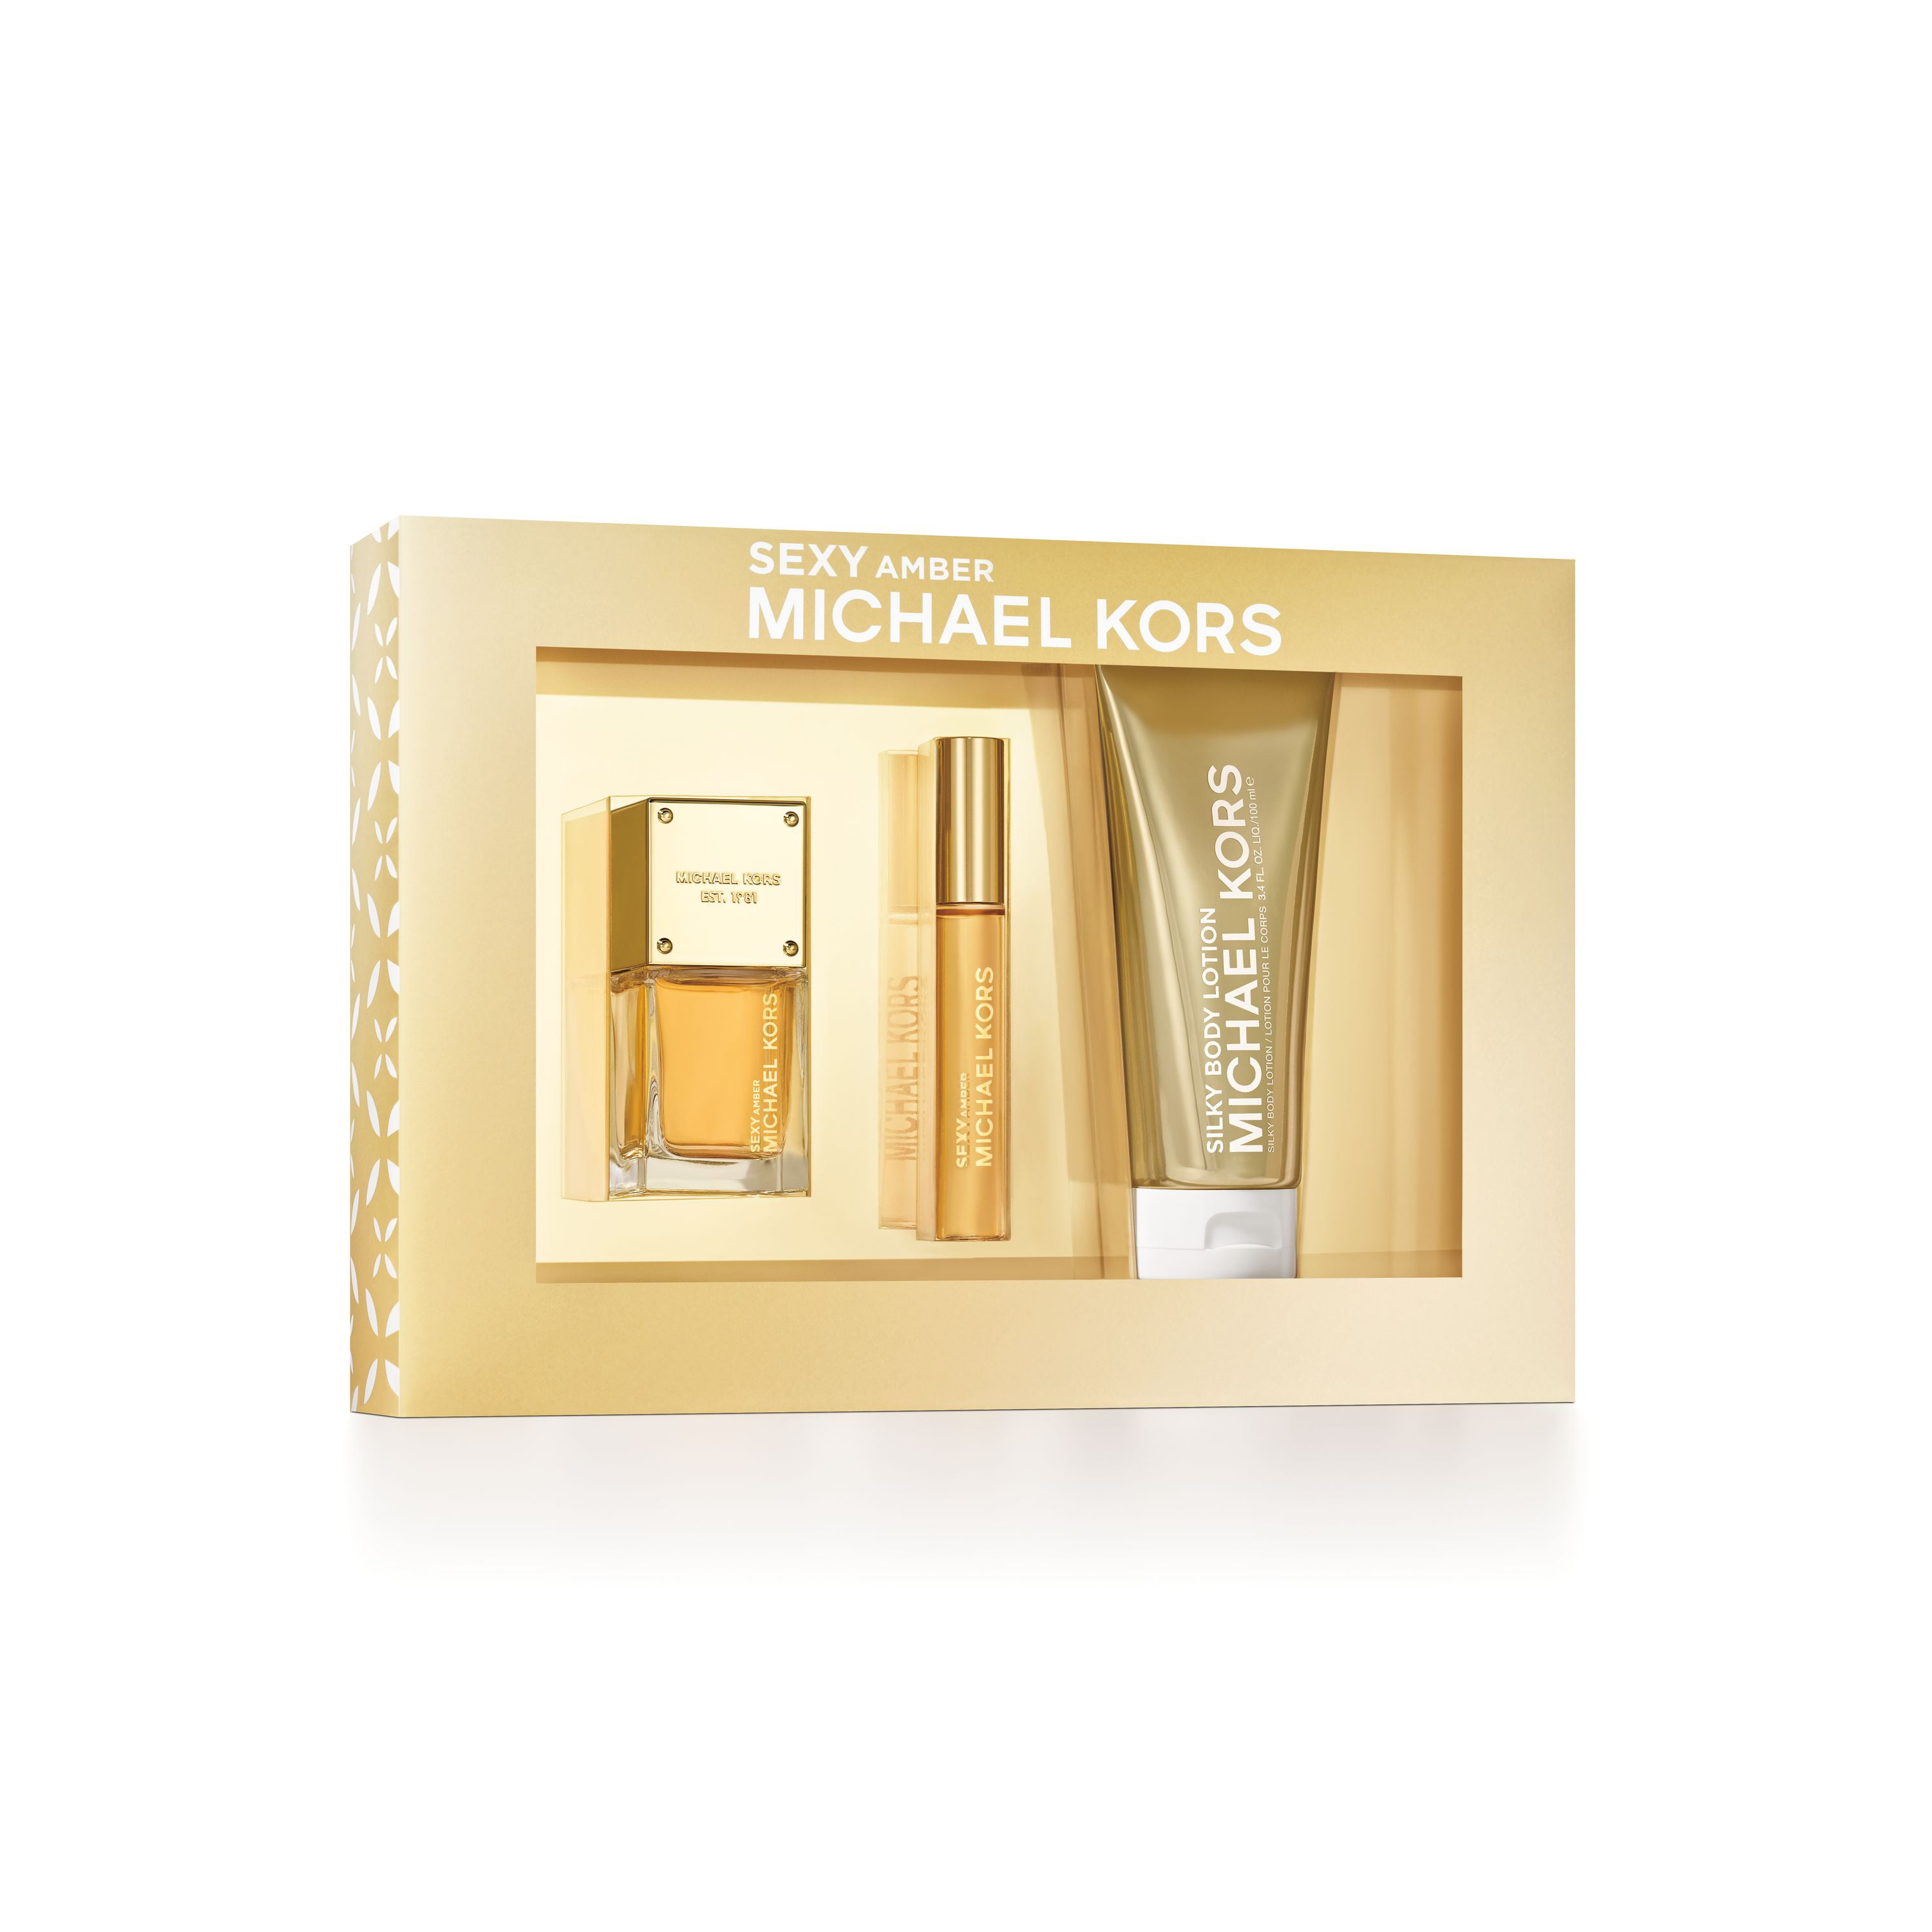 Michael Kors Original Perfume Gift Set Online  wwwkalyanamalemcom  1690925945